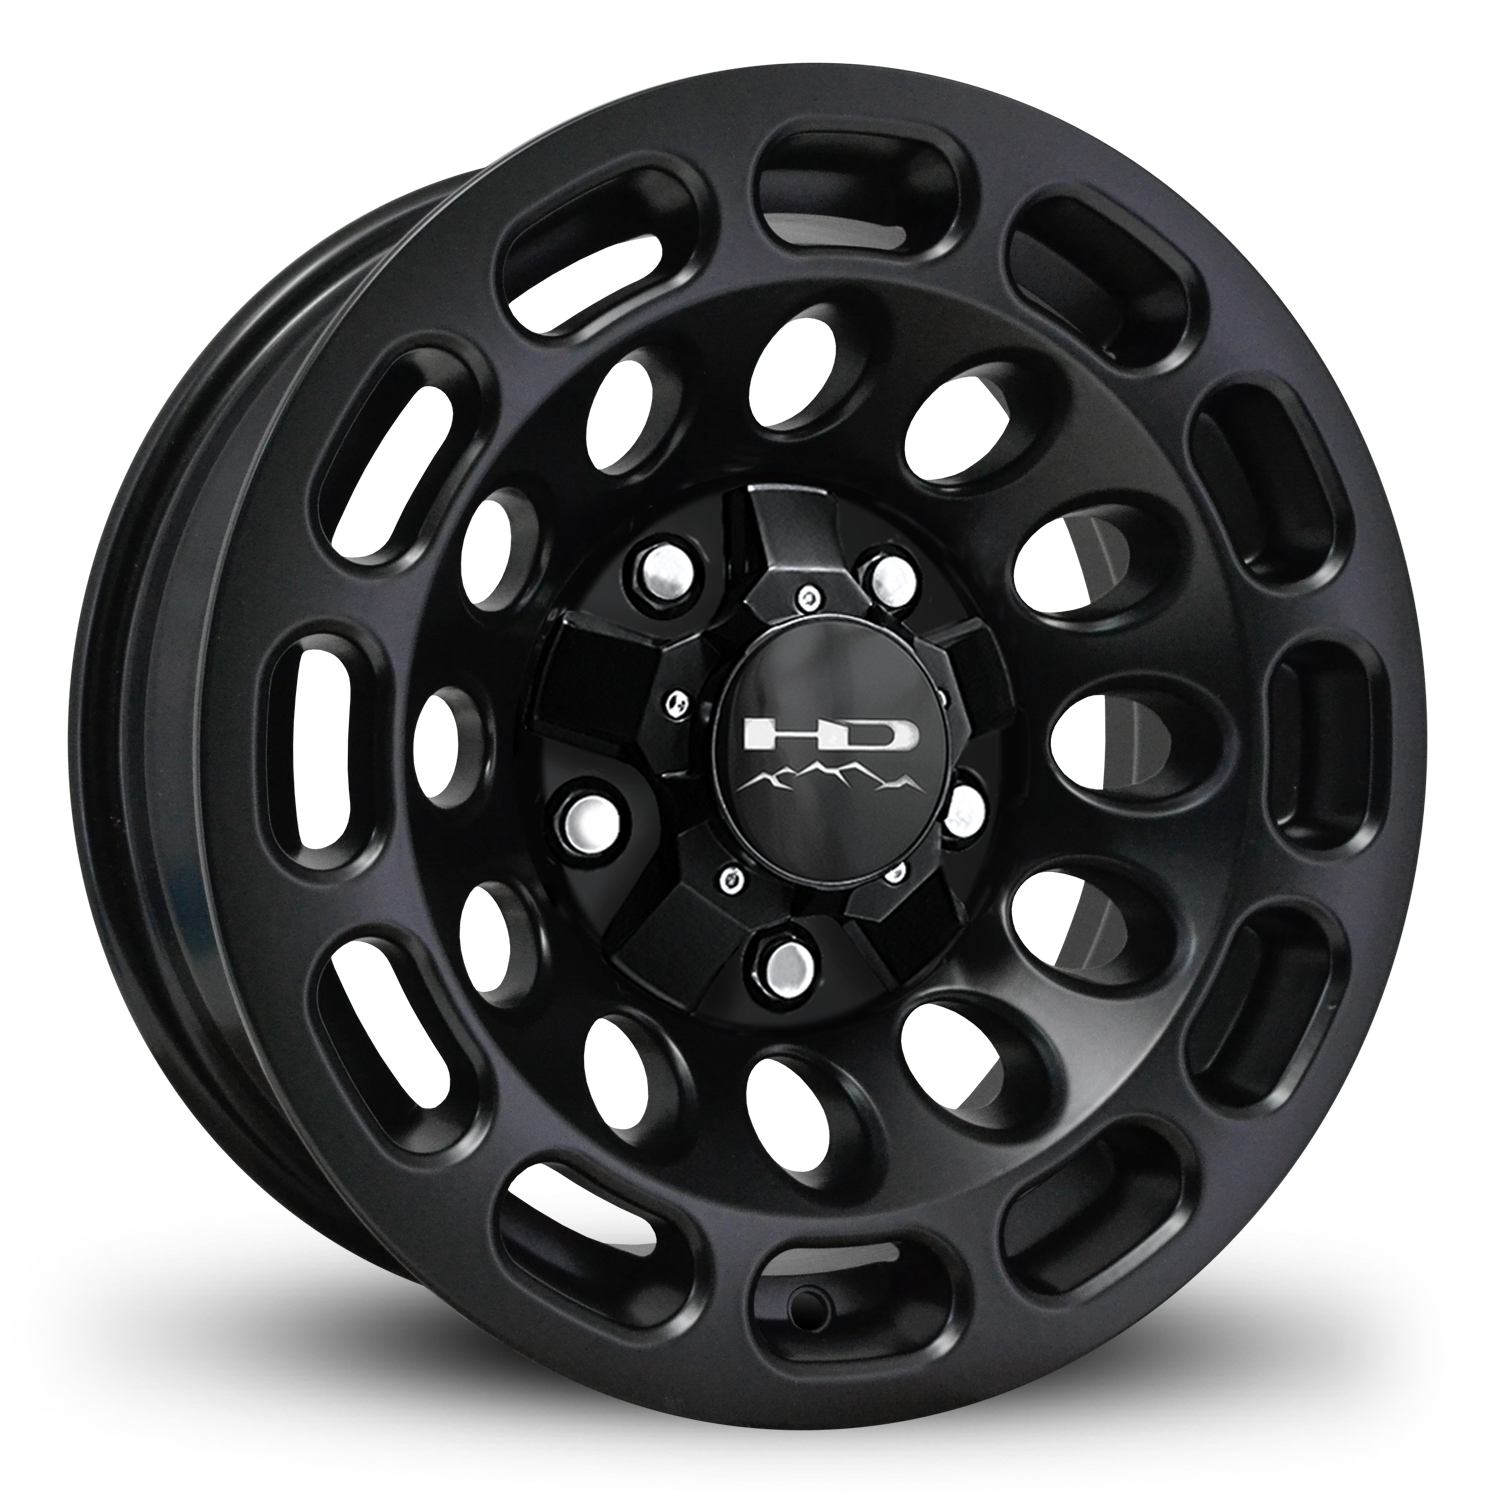 HD Off-Road Road Warrior Custom Trailer Wheels in 15x6.0 in 5 lug All Satin Black for Unility, Boat, Car, Construction, Horse, & RV